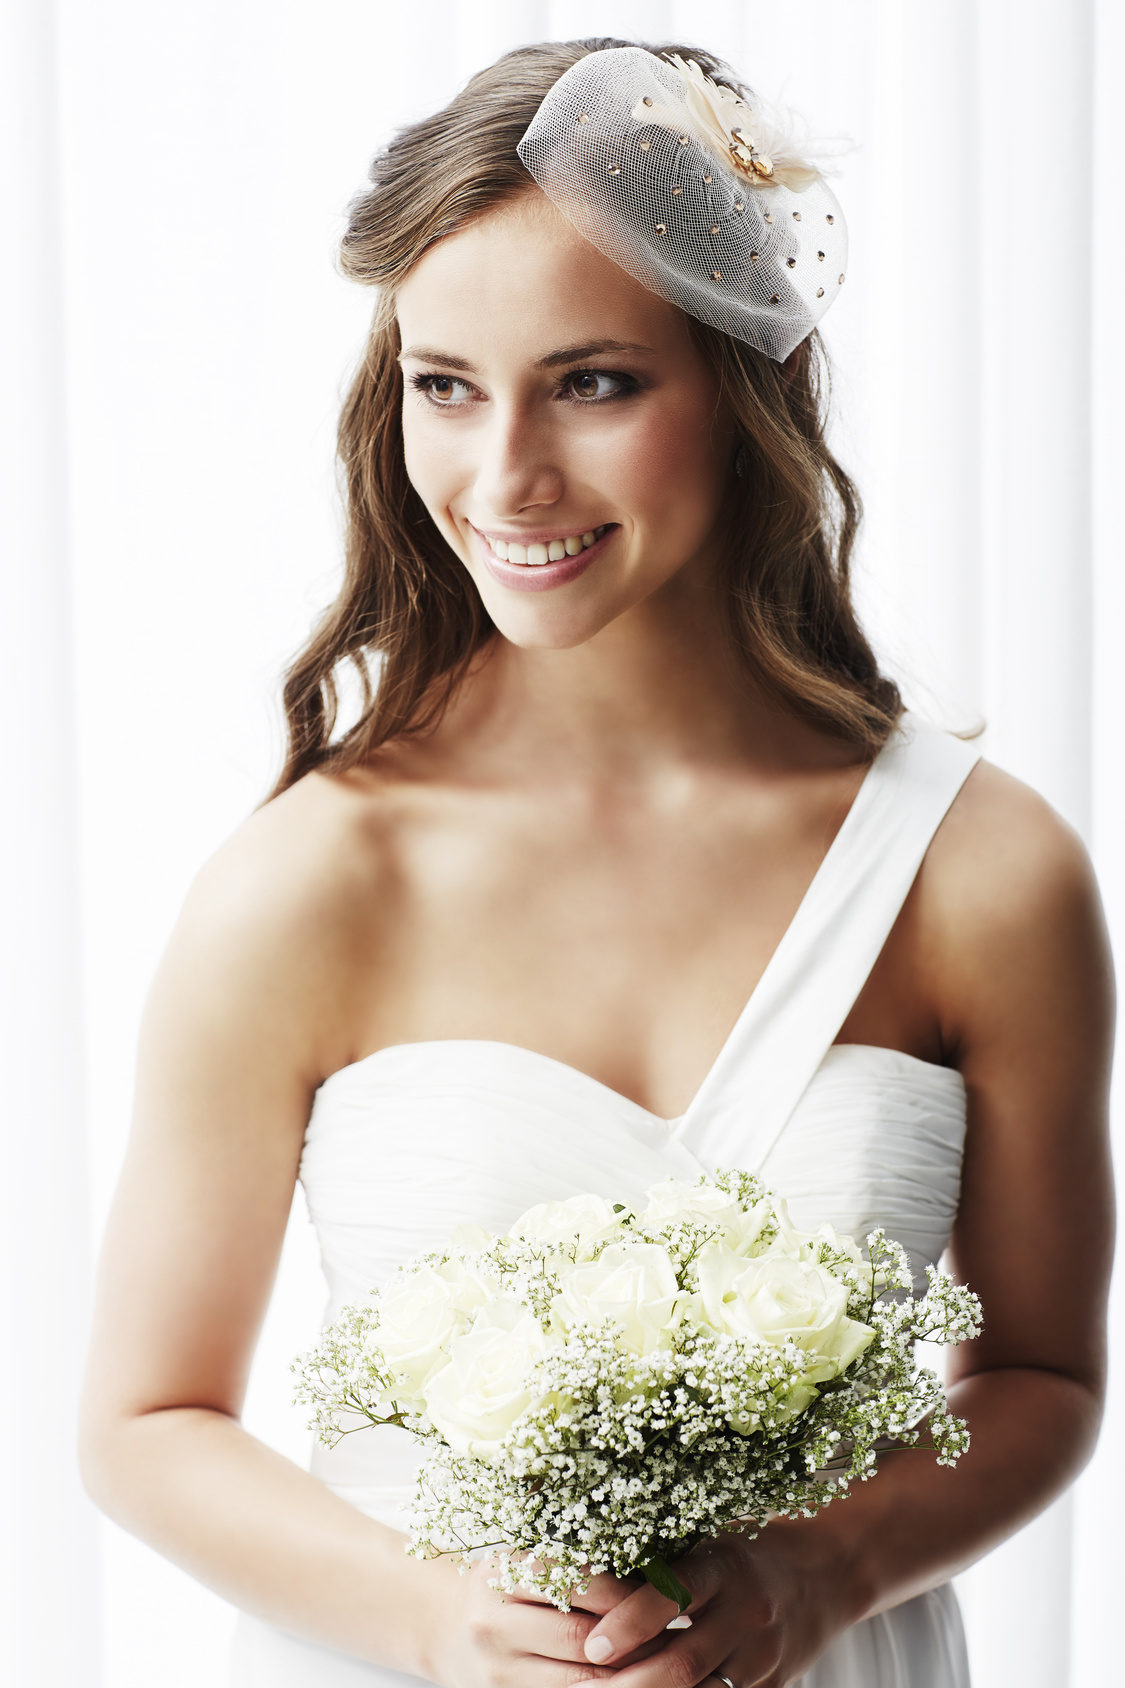 Young bride in wedding dress holding bouquet, studio shot .